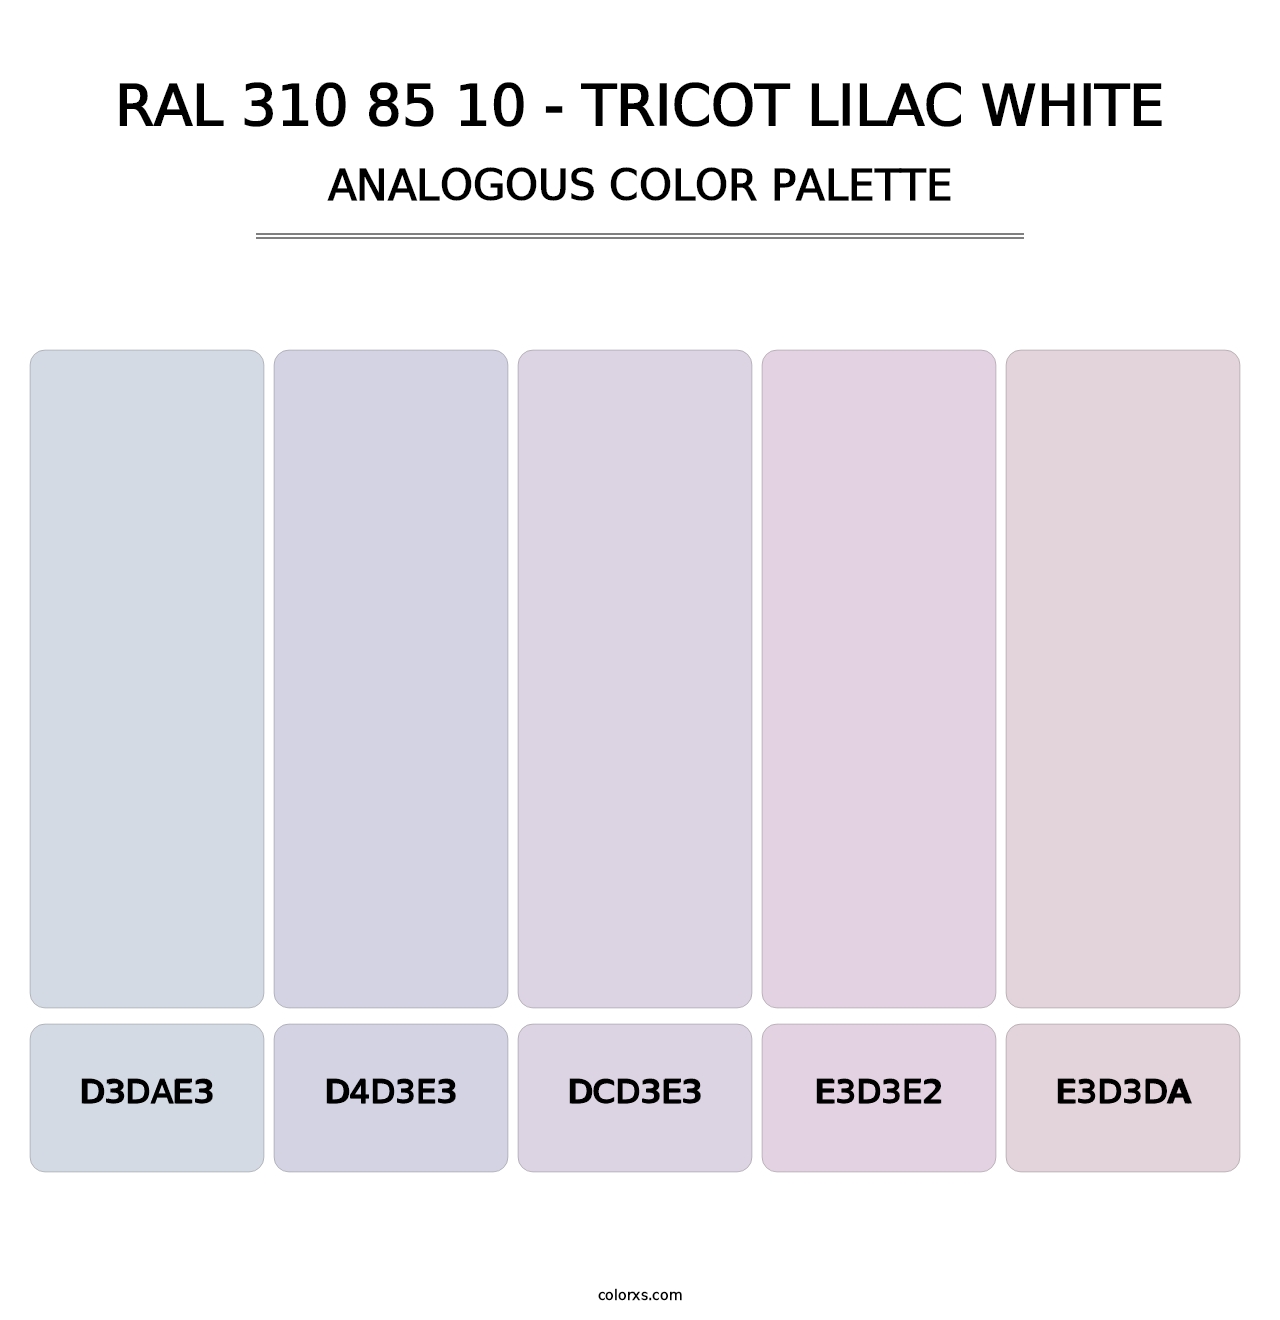 RAL 310 85 10 - Tricot Lilac White - Analogous Color Palette